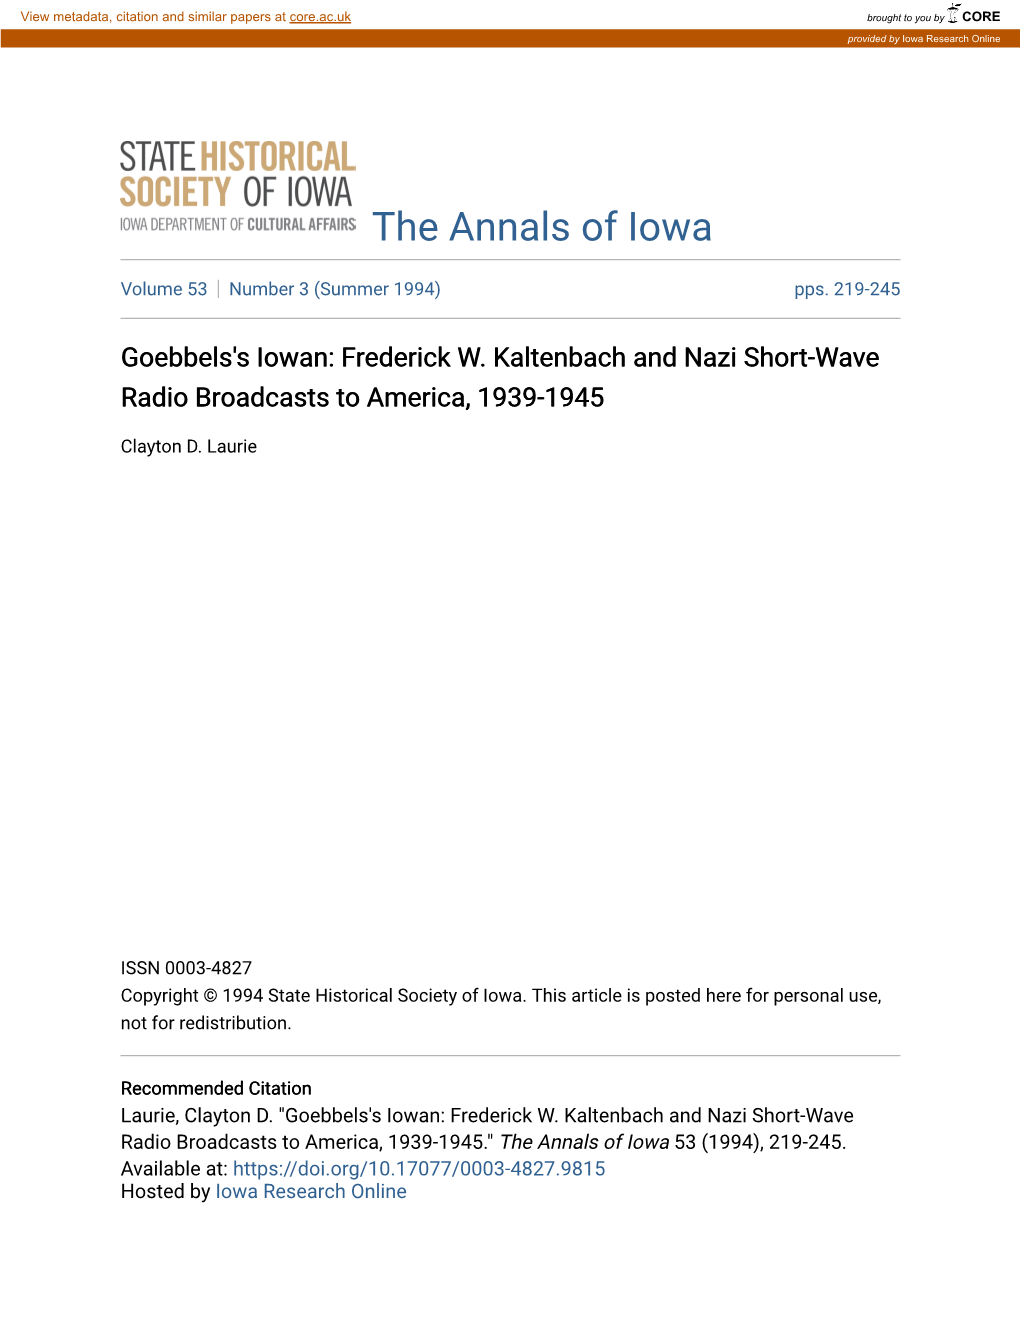 Goebbels's Iowan: Frederick W. Kaltenbach and Nazi Short-Wave Radio Broadcasts to America, 1939-1945